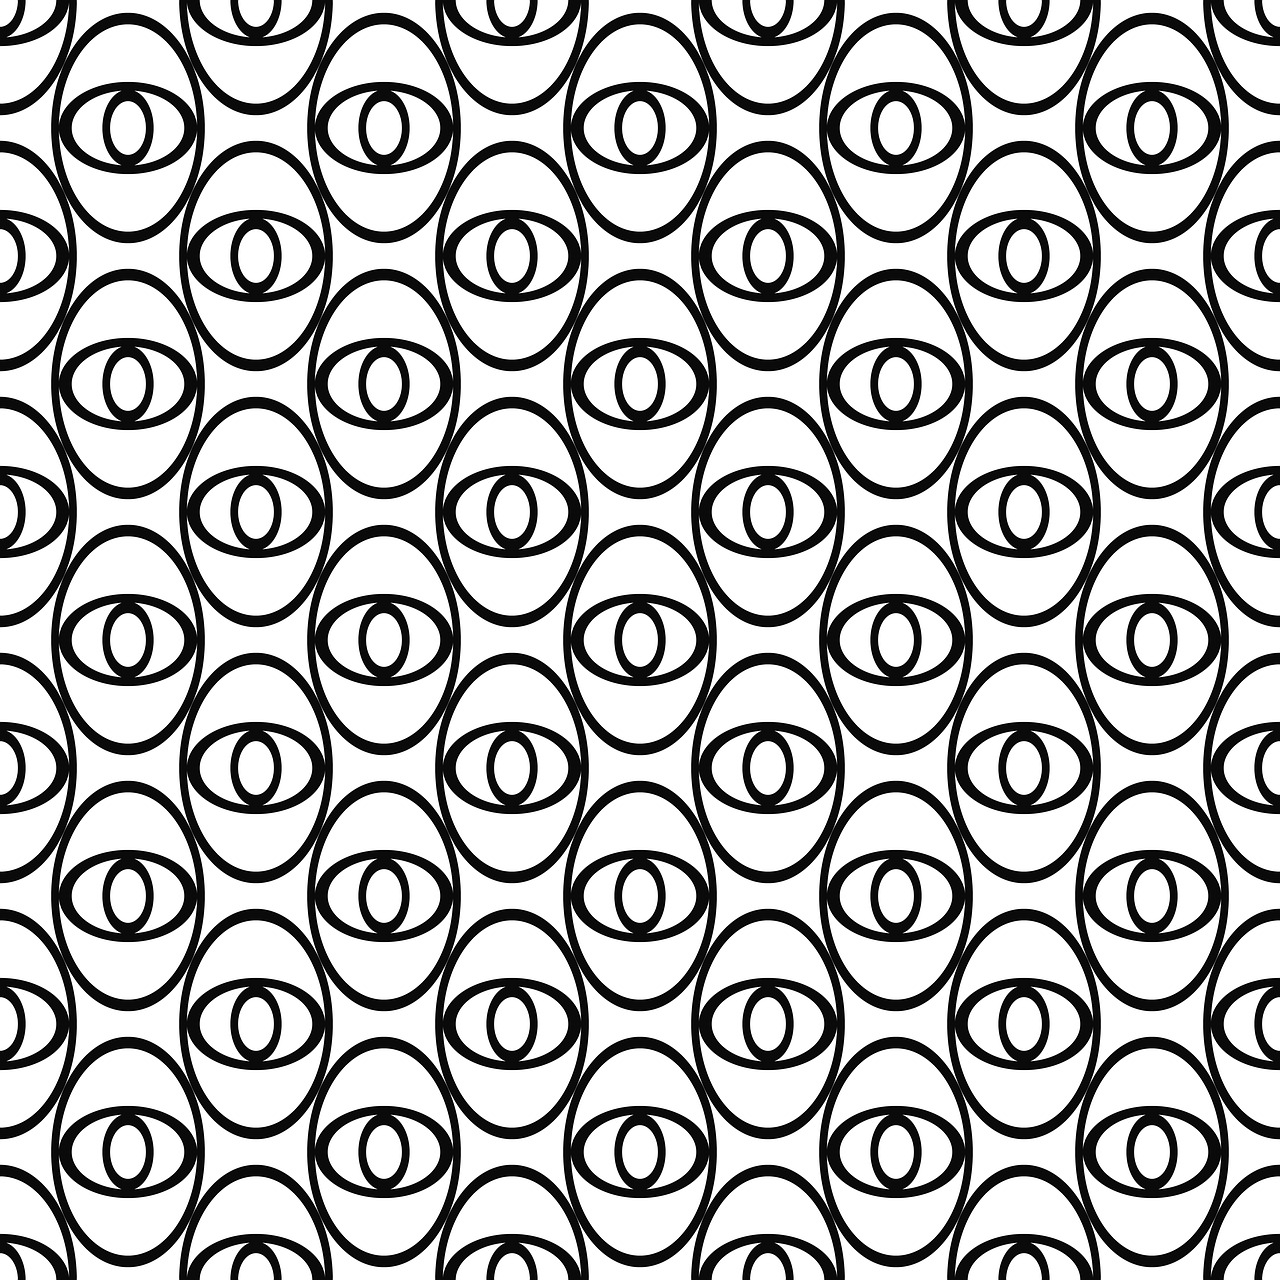 ellipse eye pattern free photo